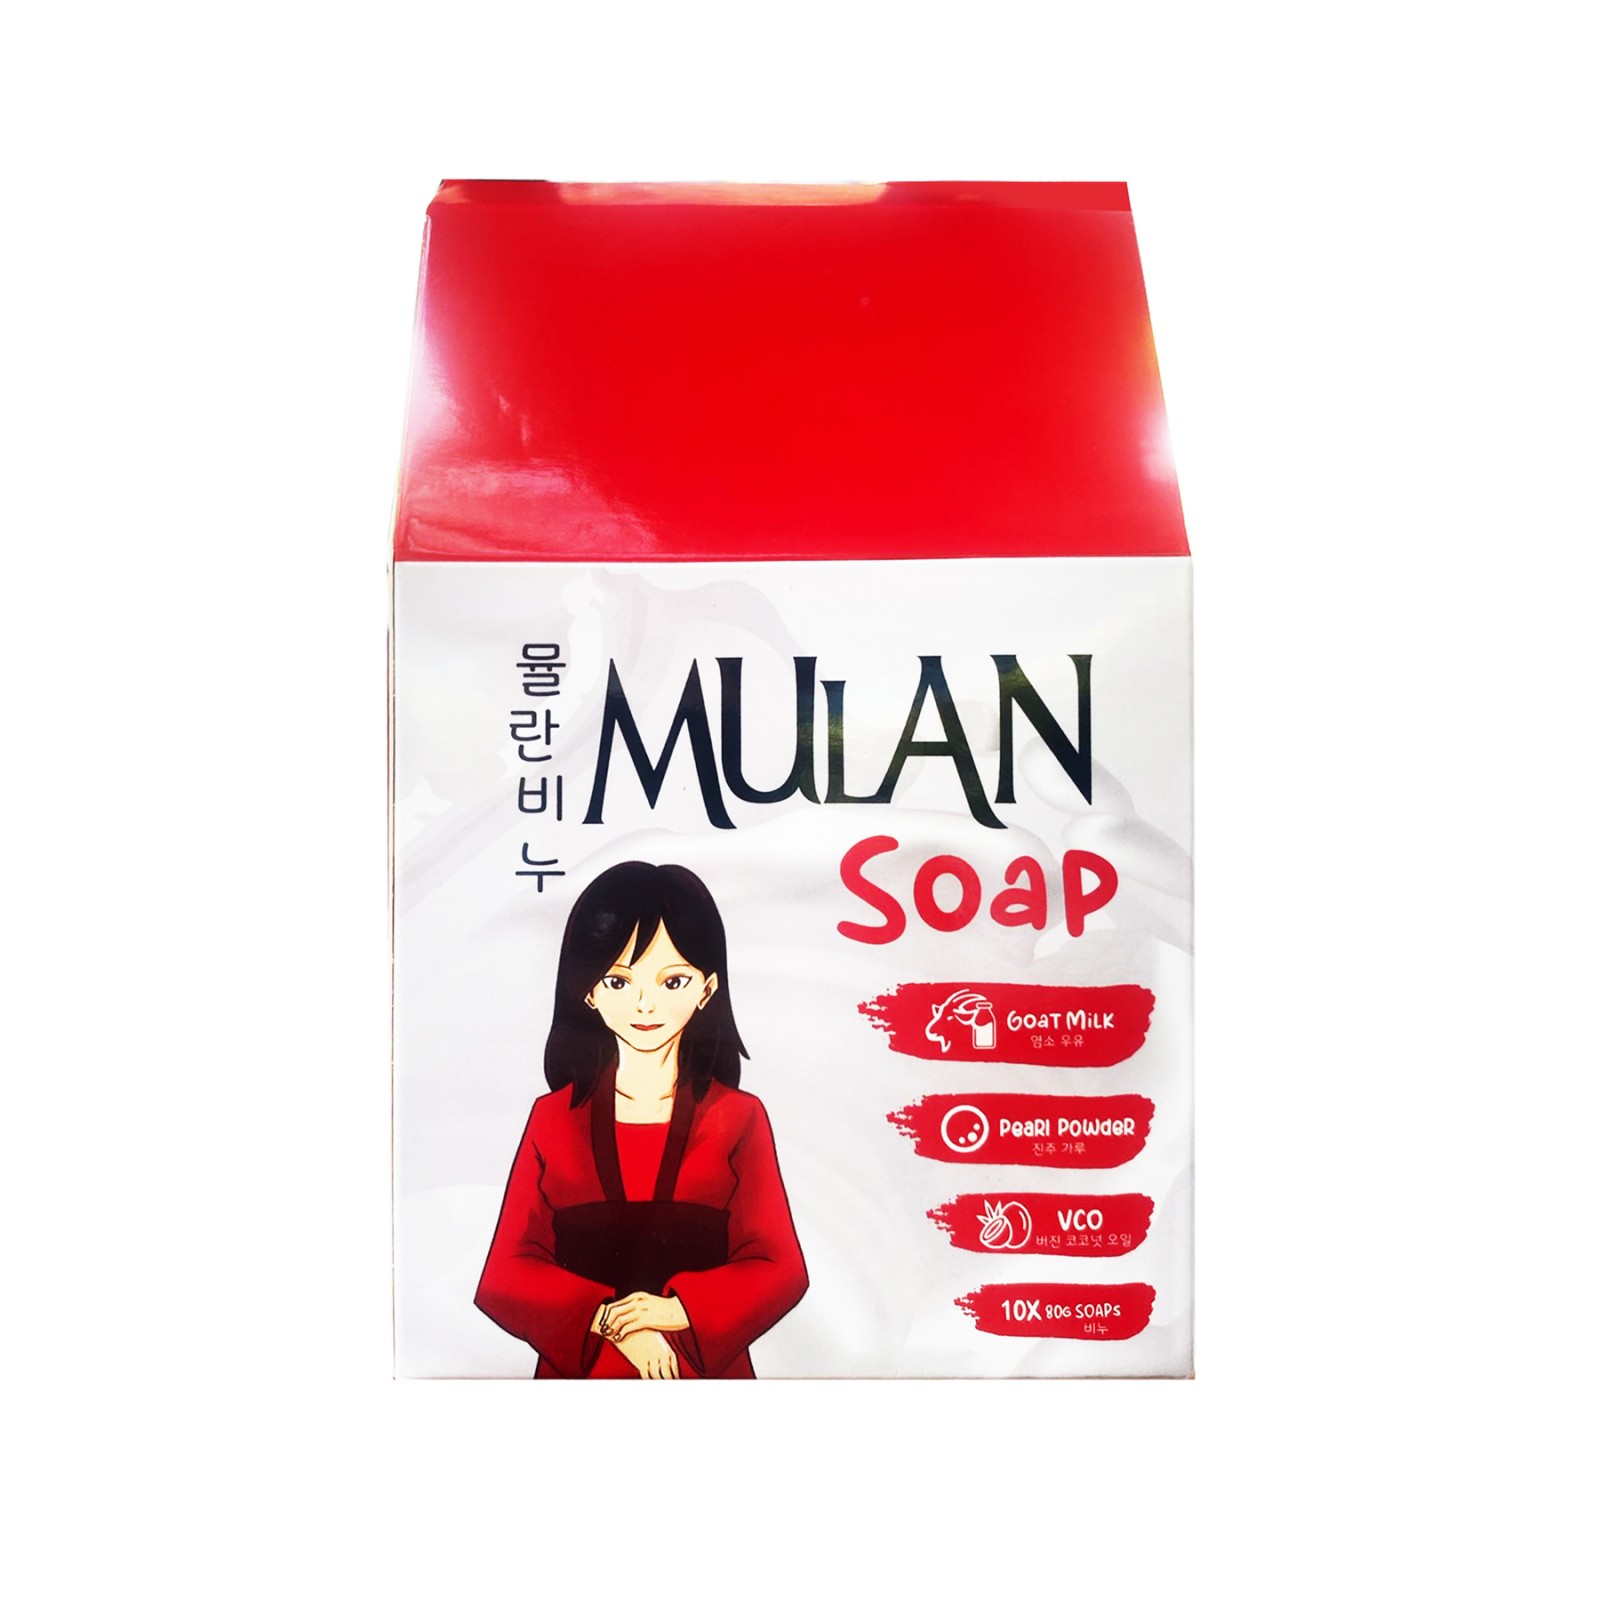 MULAN Pearl Powder + Goat Milk Soap 80g 1Box (10pcs)